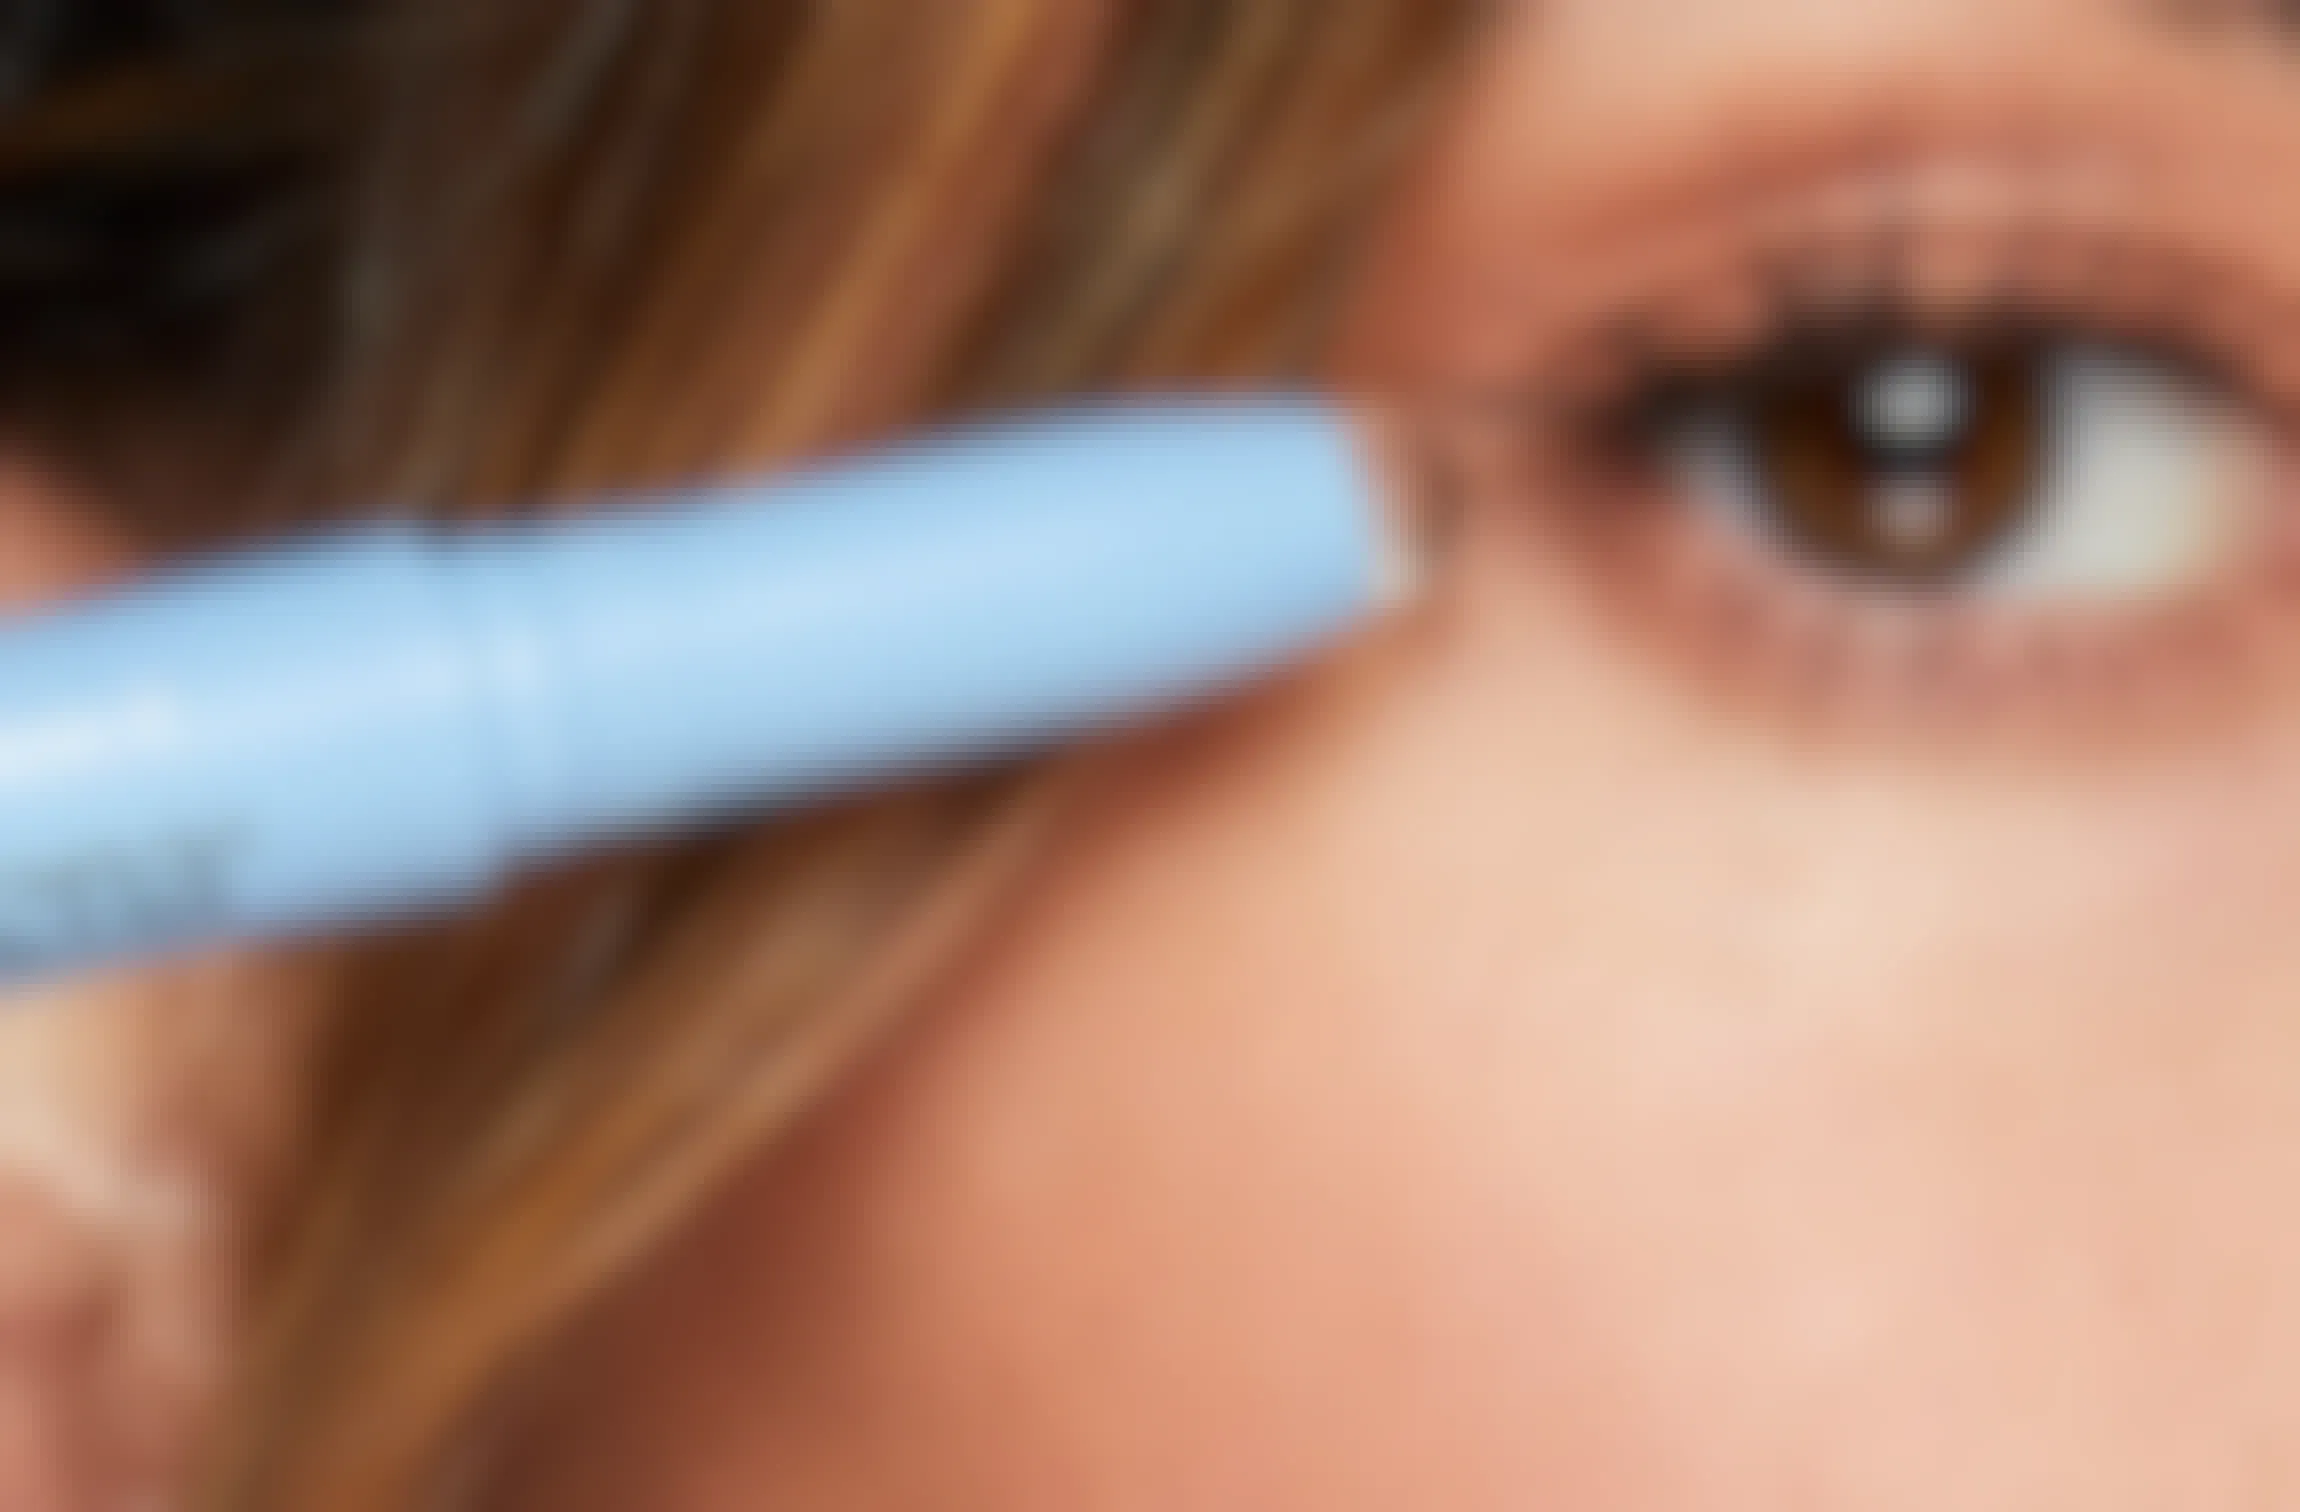 person holding a neutrogena makeup eraser stick near their eye